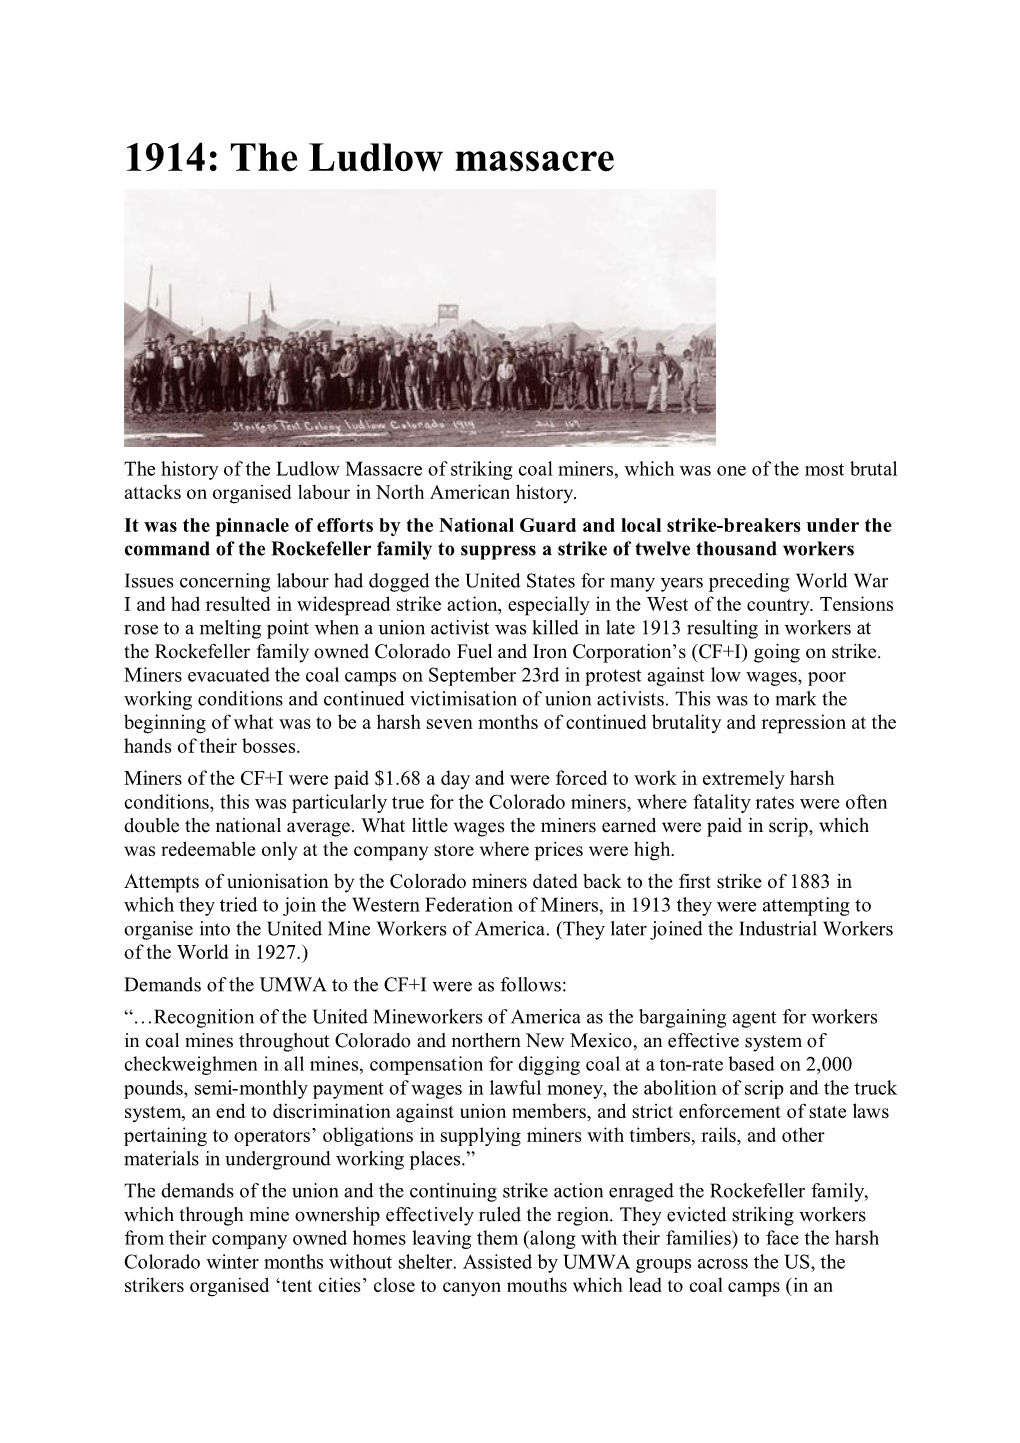 1914: the Ludlow Massacre